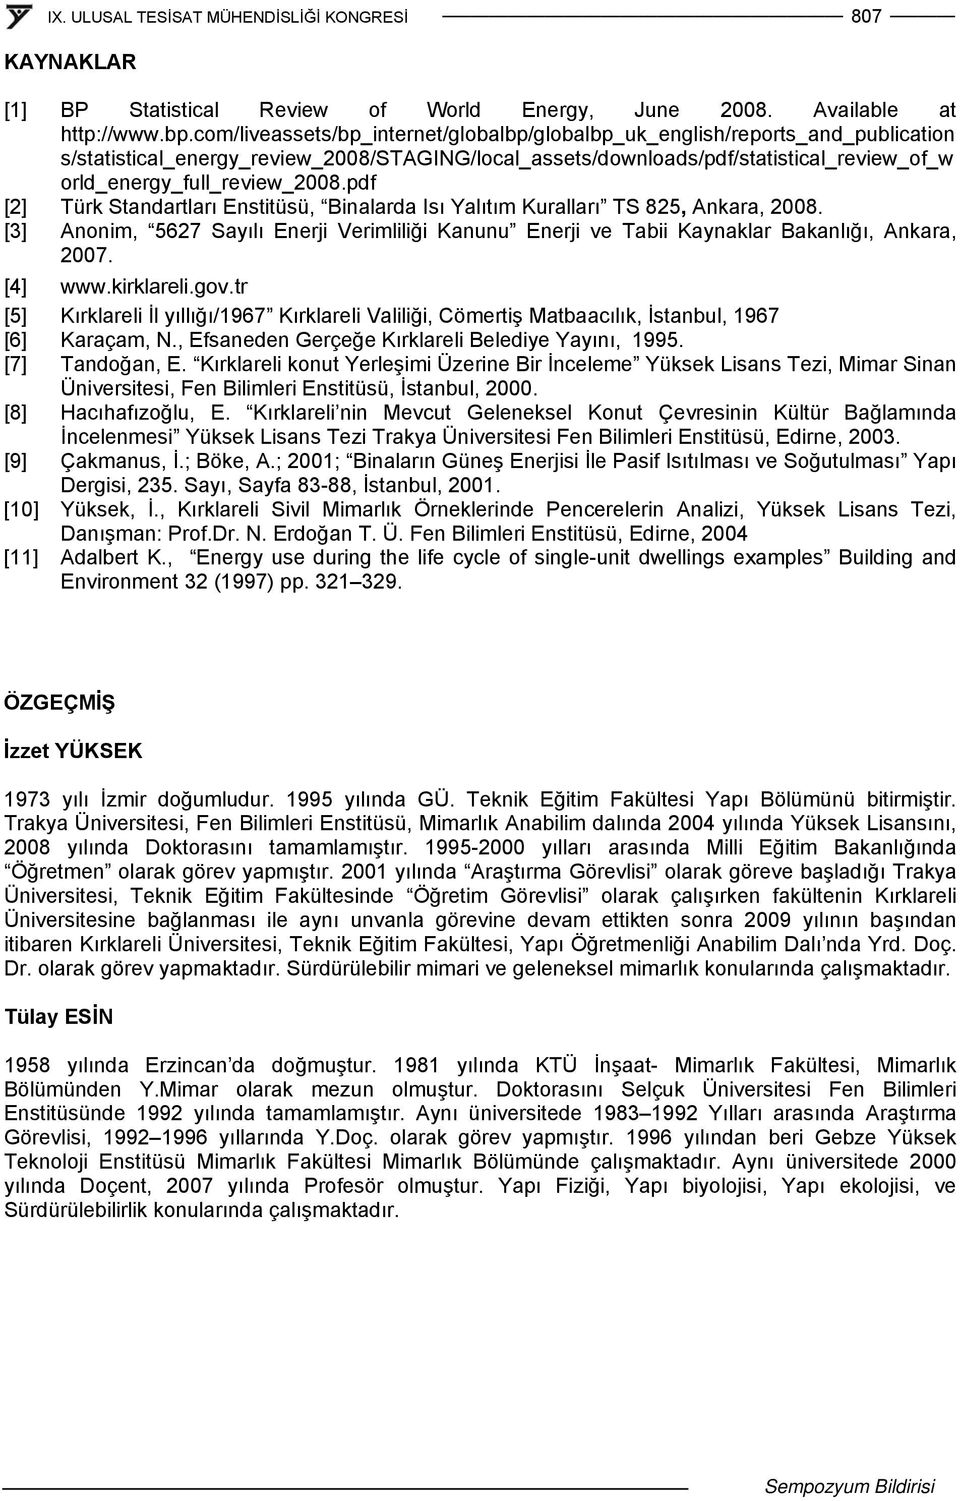 orld_energy_full_review_2008.pdf [2] Türk Standartları Enstitüsü, Binalarda Isı Yalıtım Kuralları TS 825, Ankara, 2008.